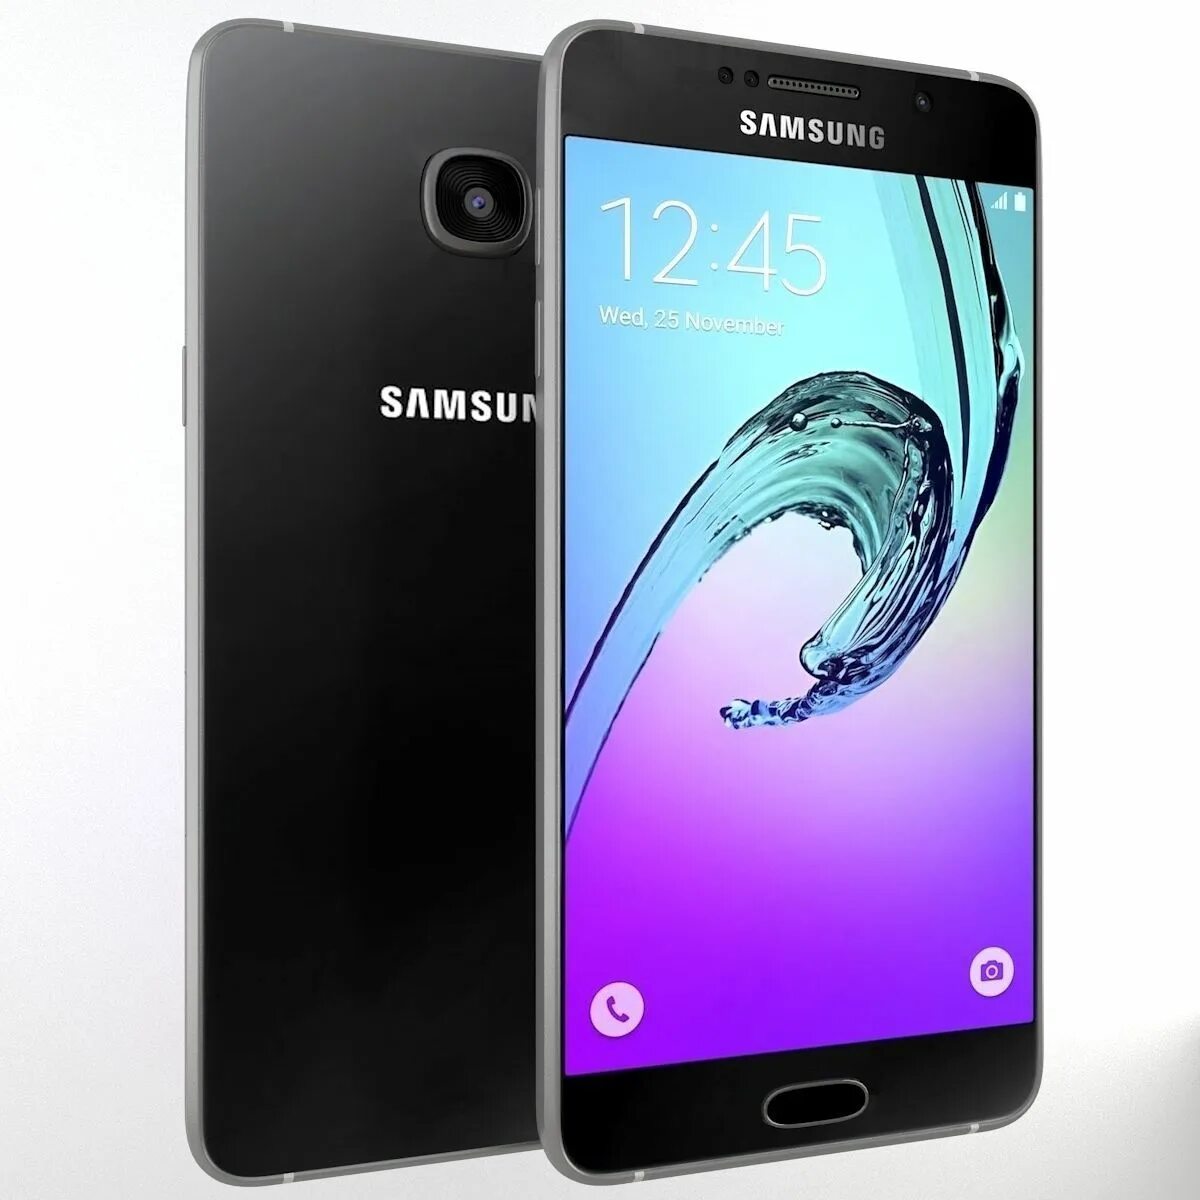 3.3 2016. Samsung Galaxy a3 2016. Samsung Galaxy a32016. Samsung Galaxy a3 2016 Black. Самсунг а3 2016.